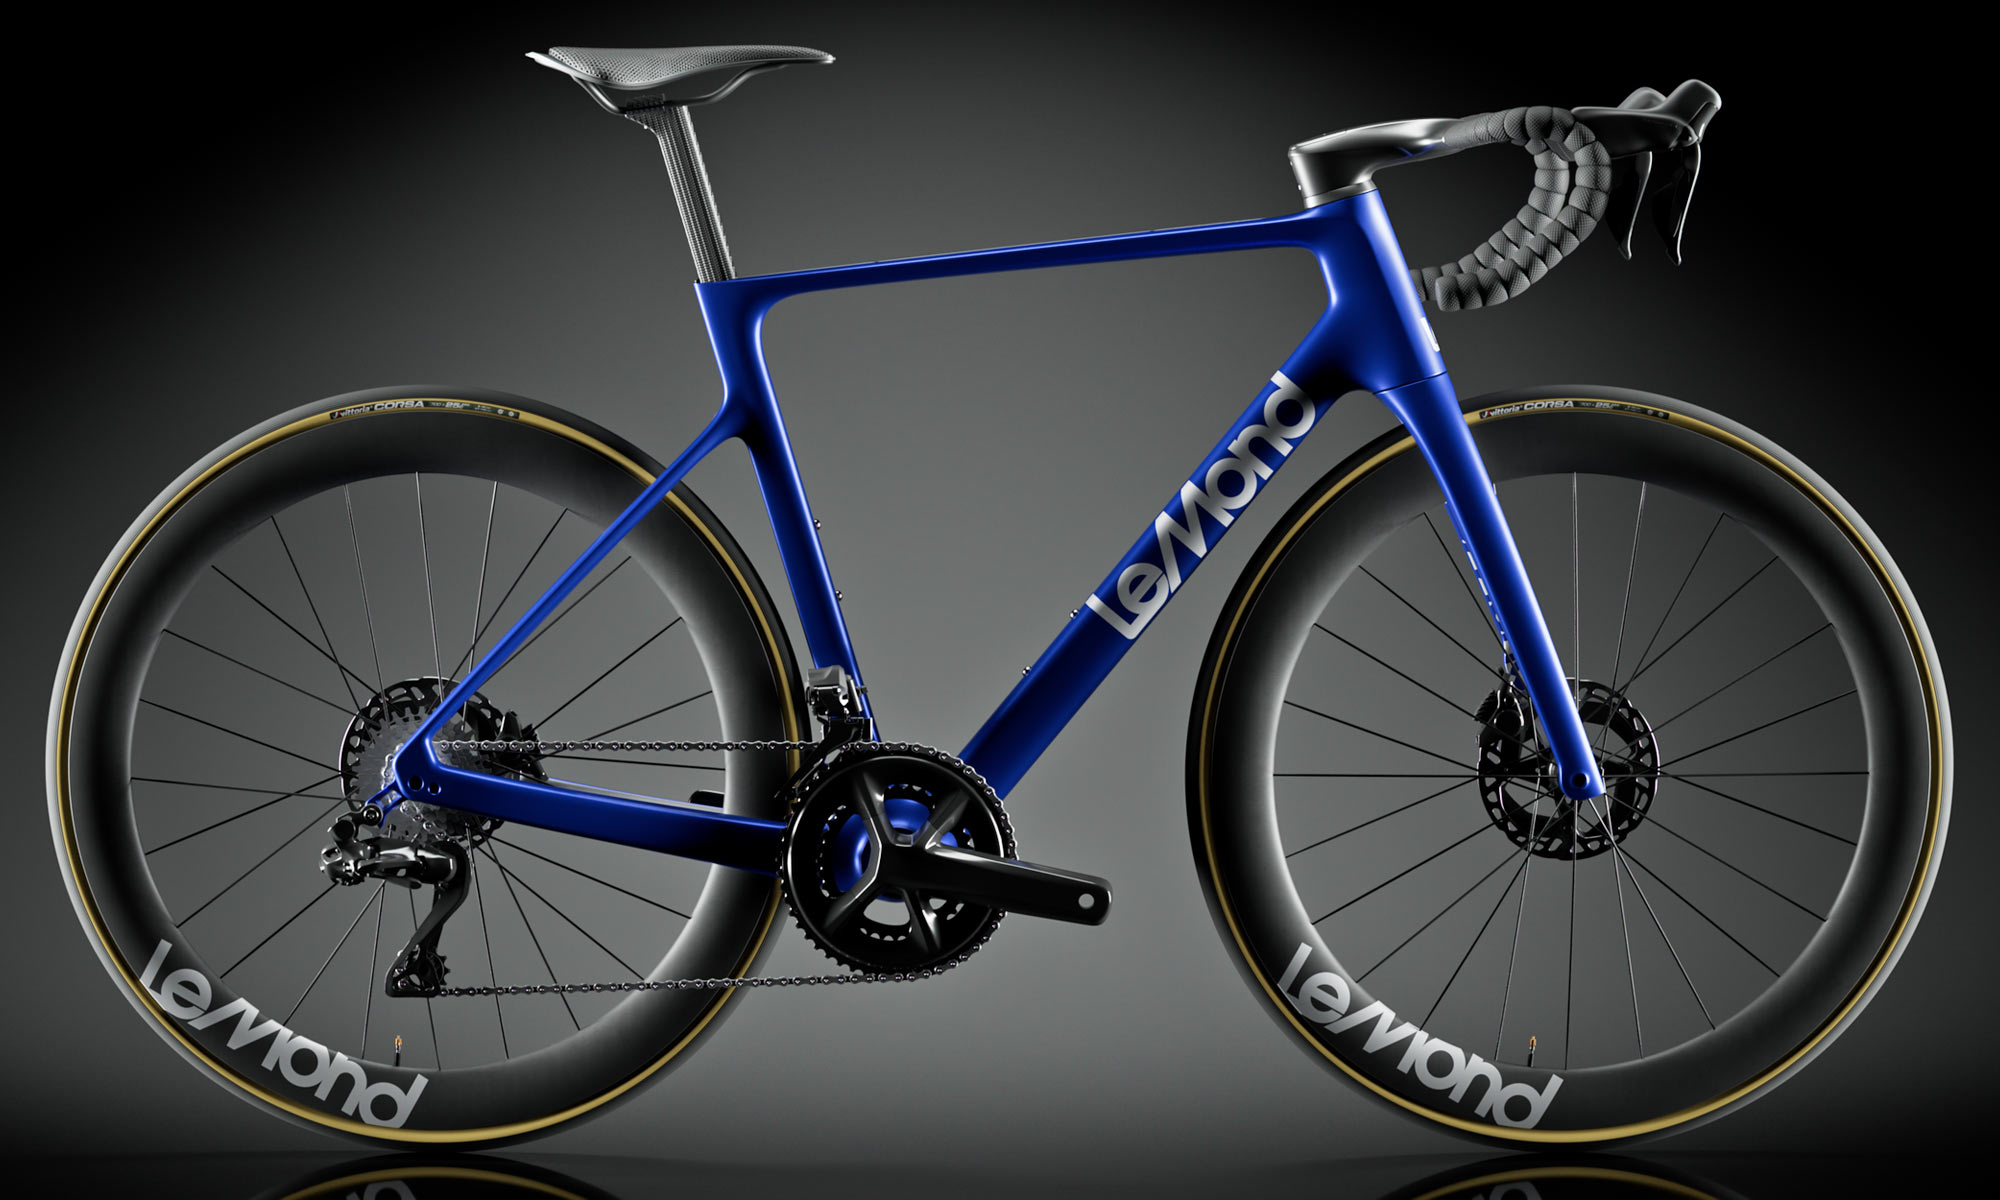 LeMond 8 revolutionary carbon aero road bike, complete